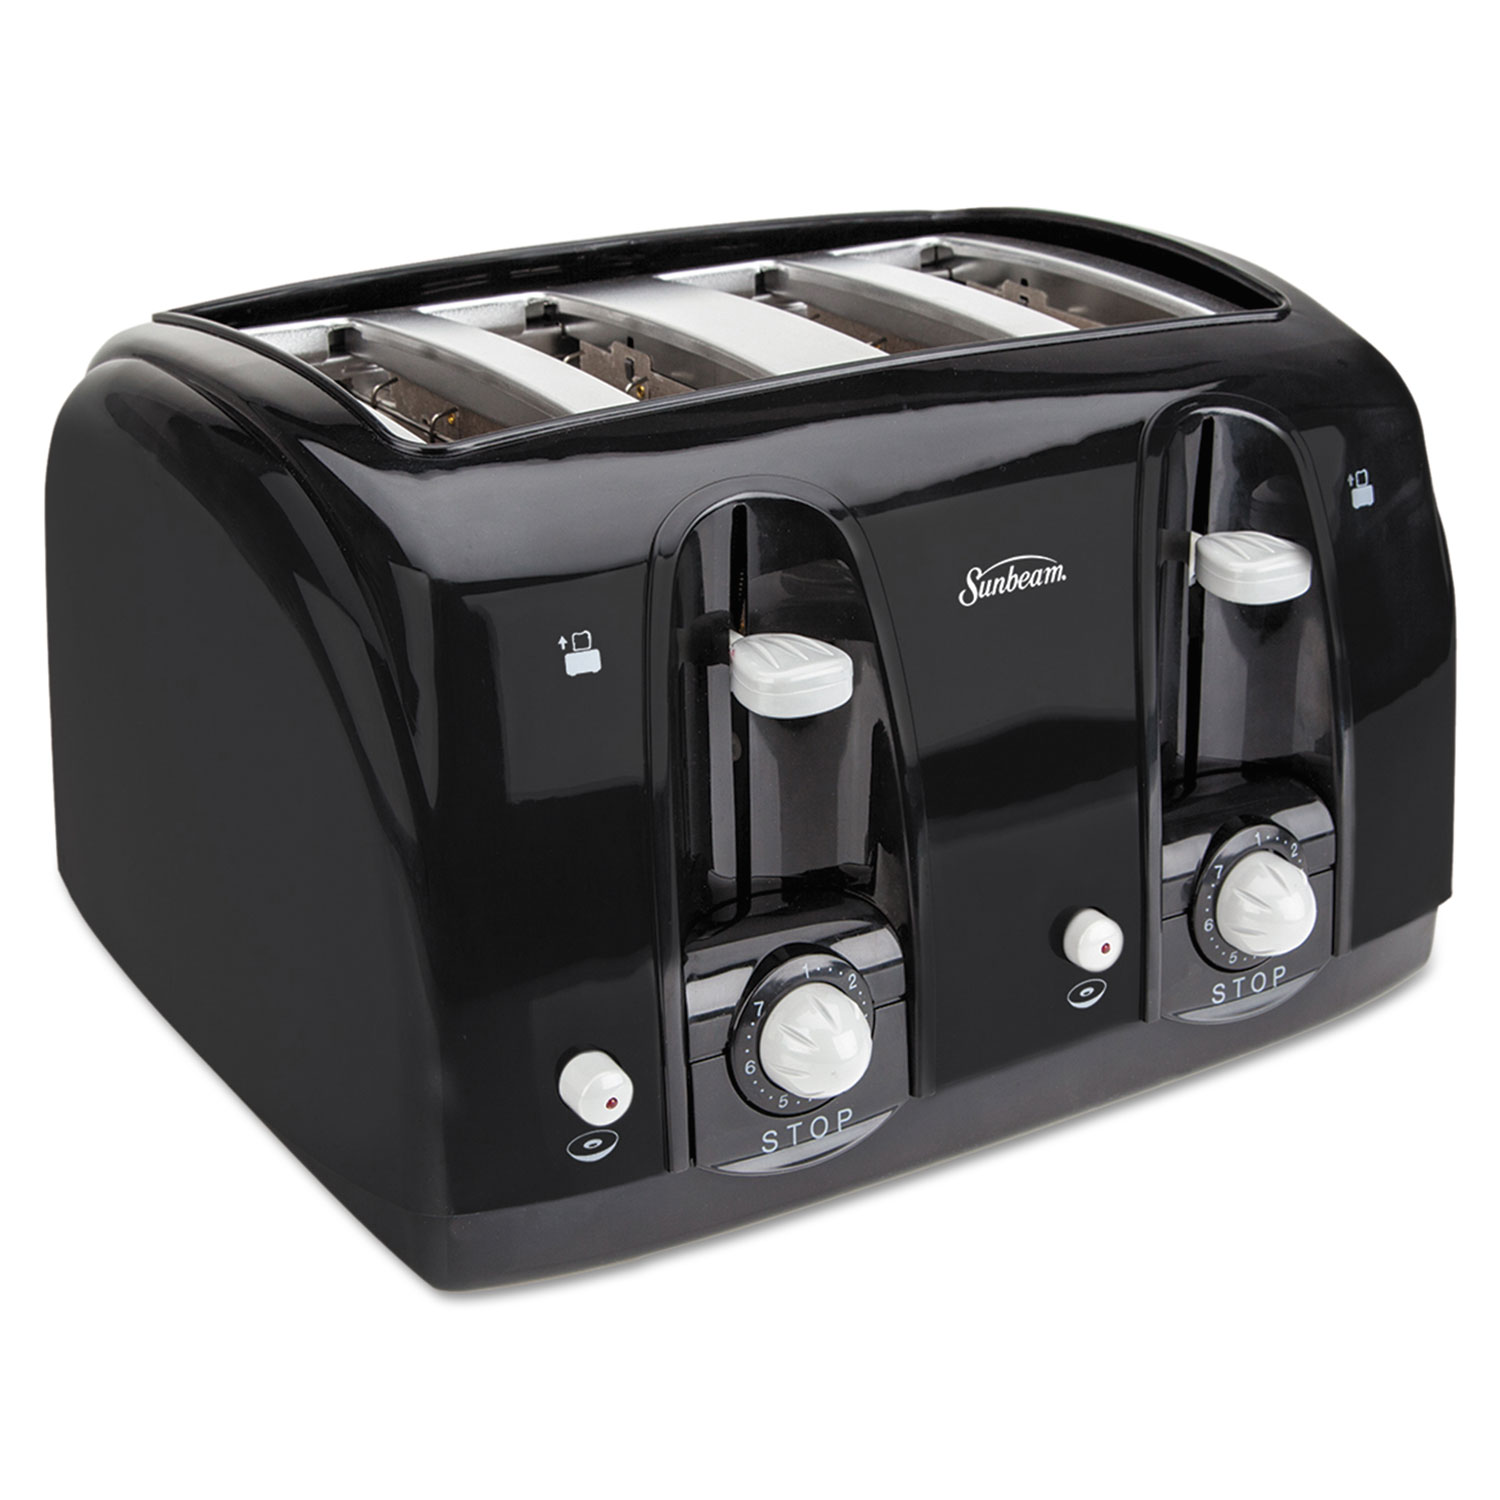  Sunbeam 3911100000 Extra Wide Slot Toaster, 4-Slice, 11 3/4 x 13 3/8 x 8 1/4, Black (SUN39111) 